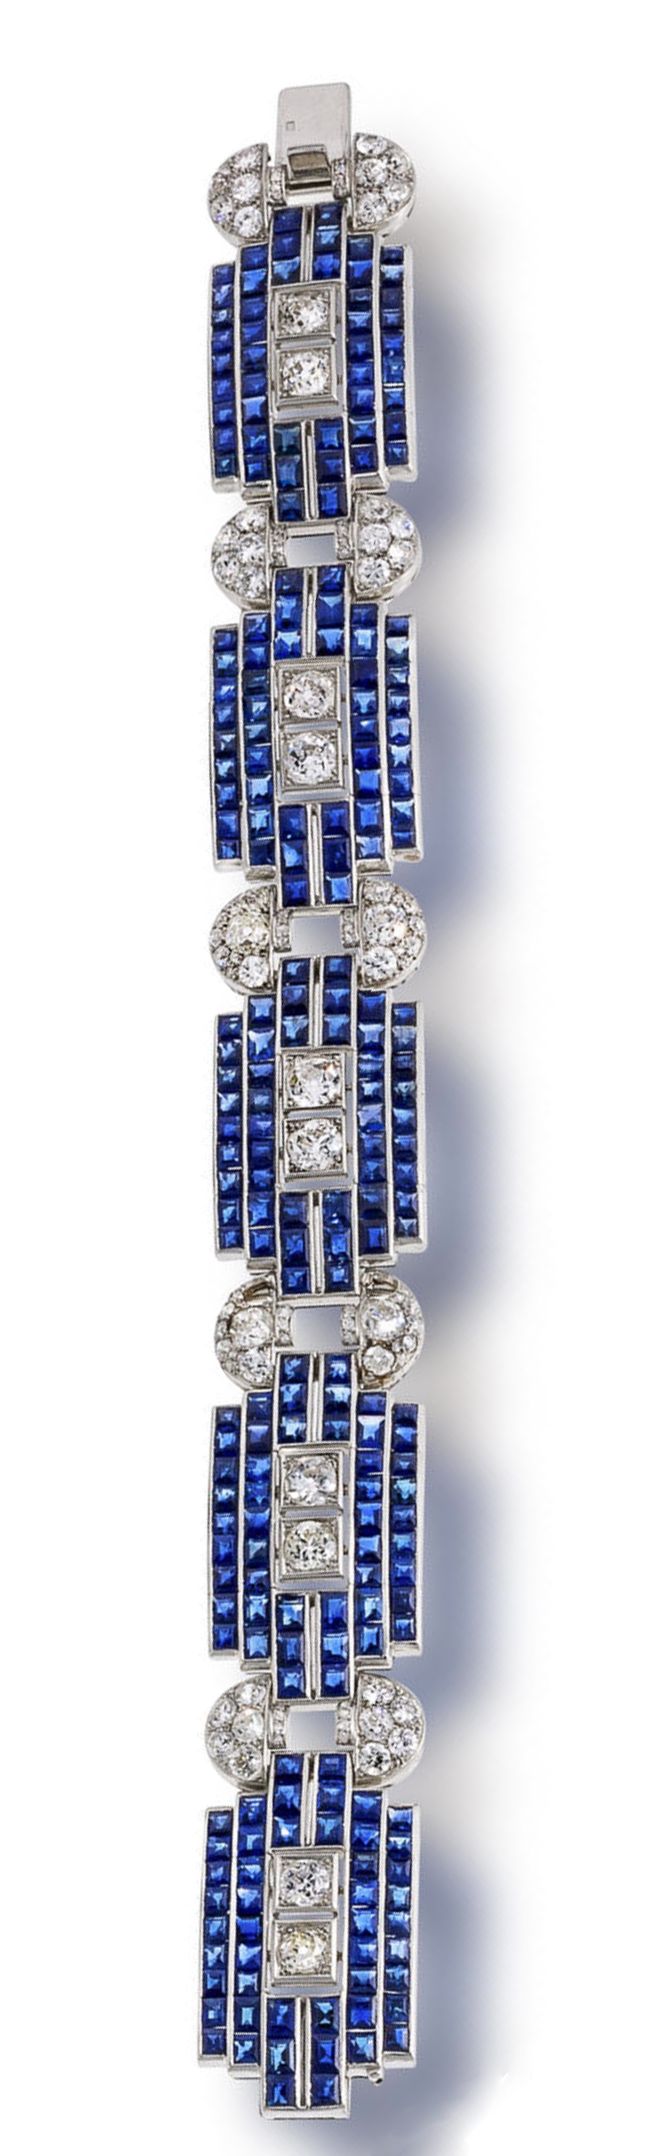 A sapphire and diamond bracelet, circa 1935 composed of geometric links set with...